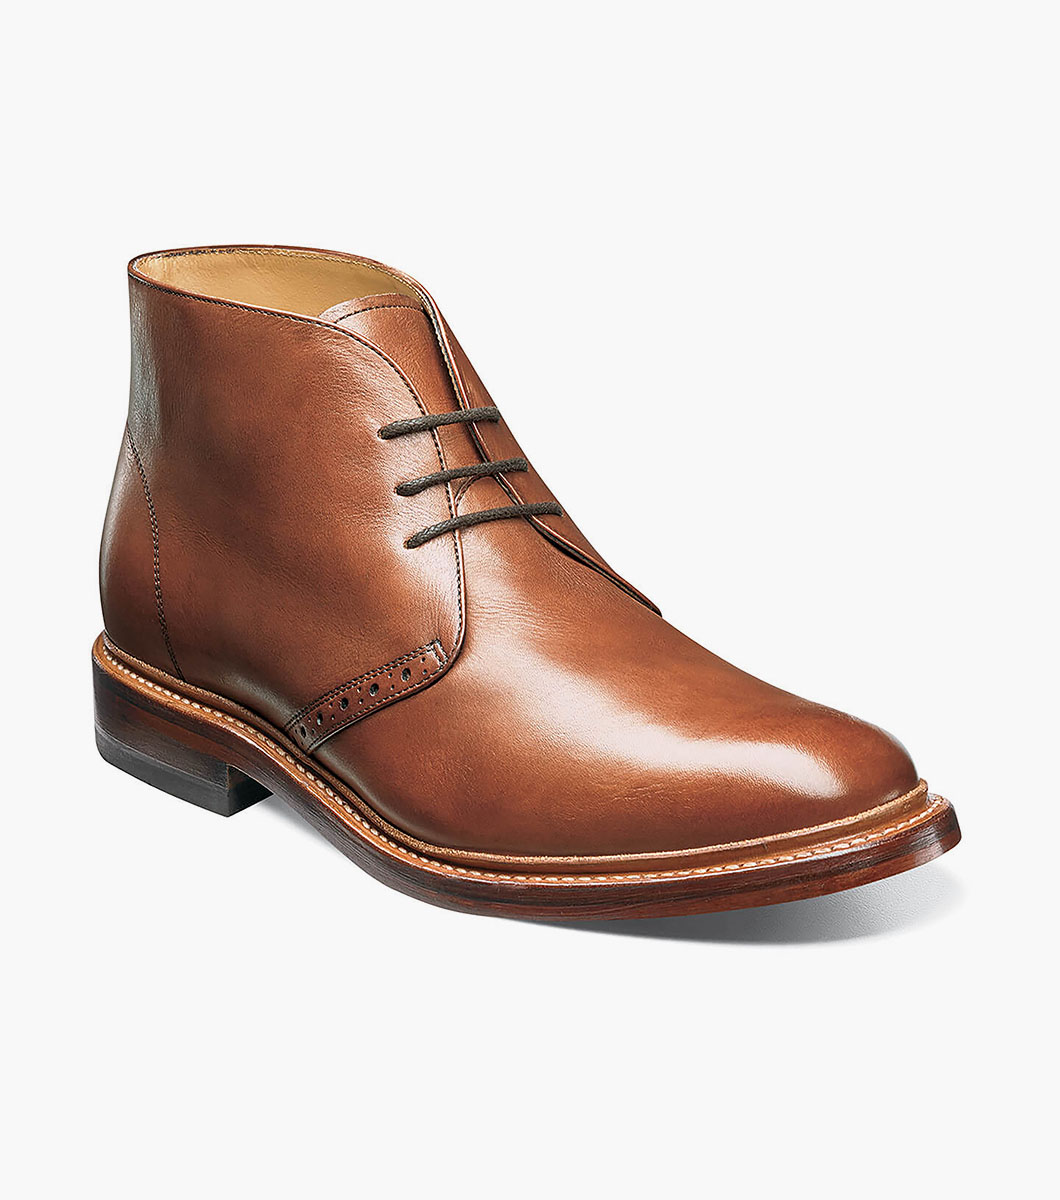 Men's Dress Shoes | Cognac Plain Toe Chukka Boot | Stacy Adams Madison II